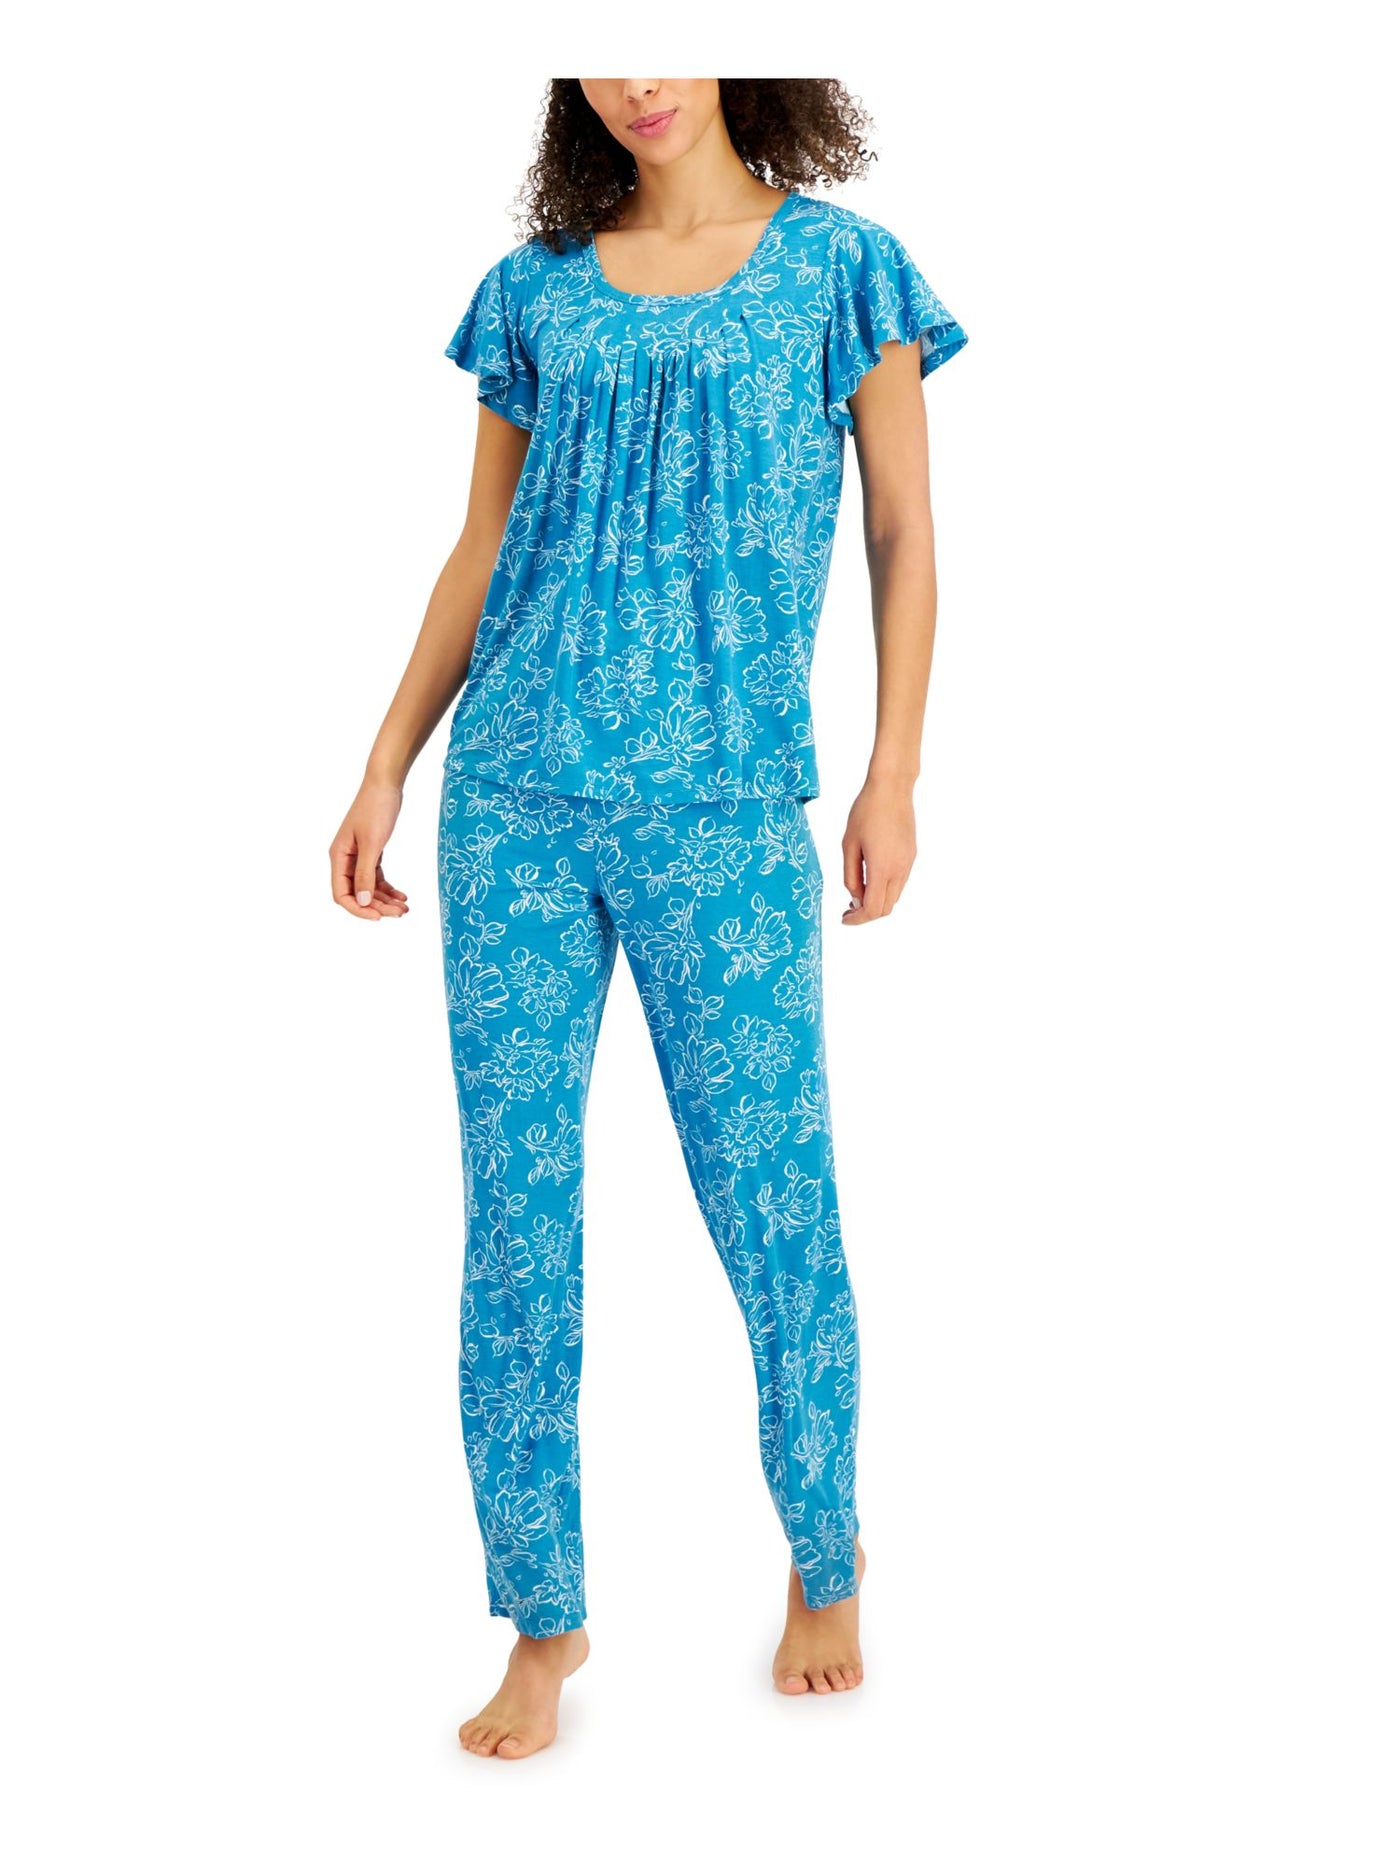 CHARTER CLUB Intimates Blue Pleated Floral Sleep Shirt Pajama Top XL